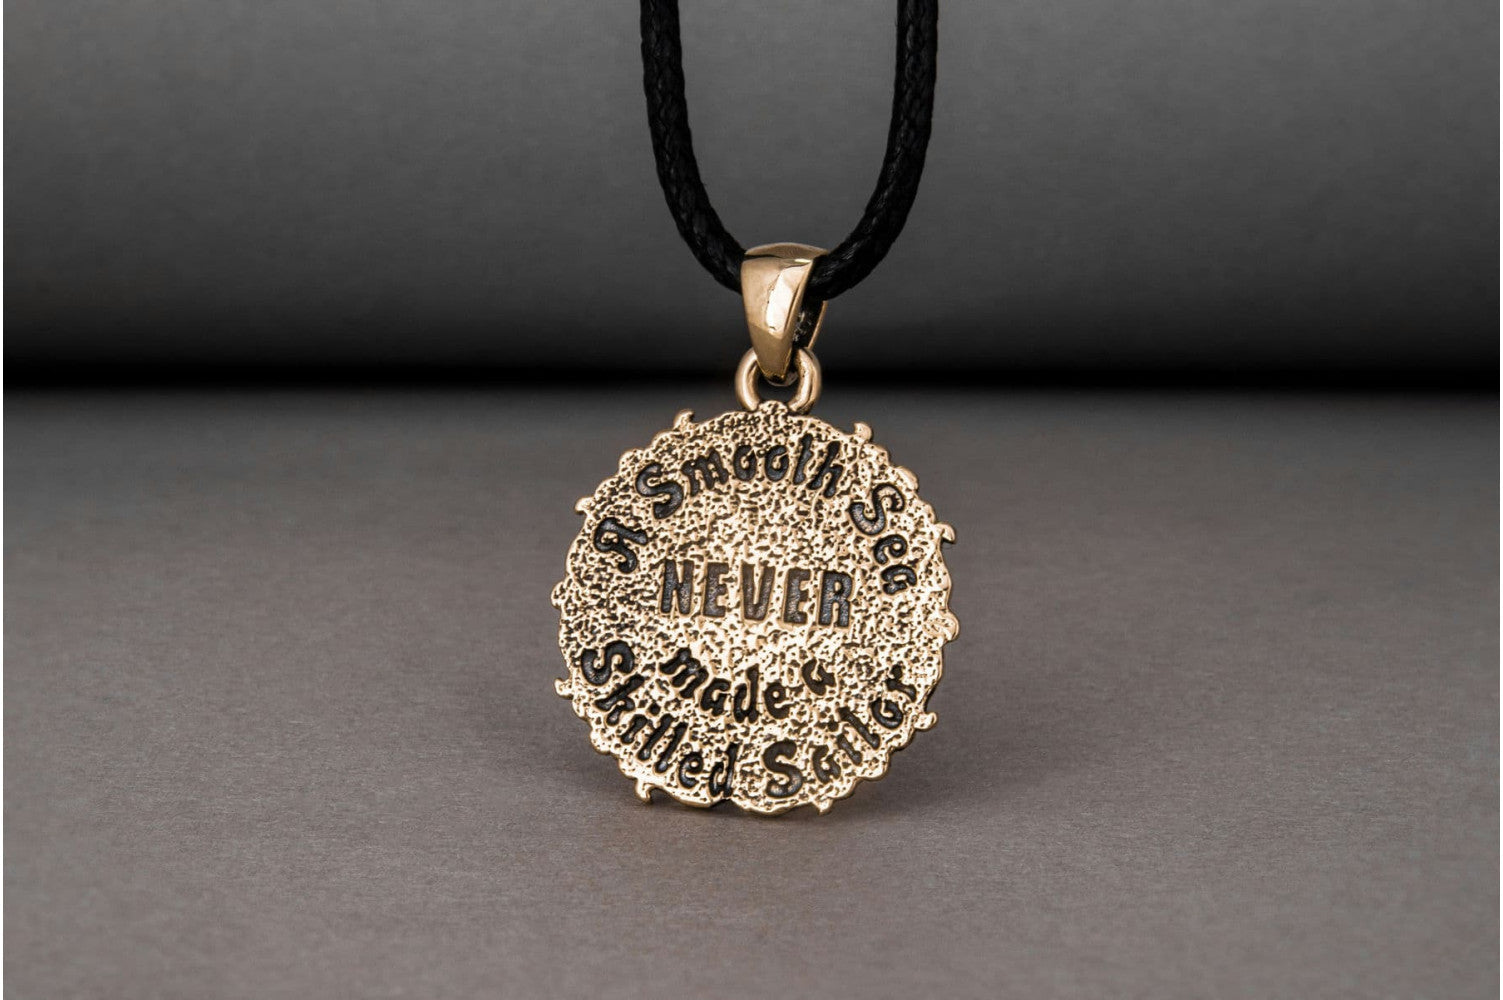 Compass Pendant with Ornament Bronze Jewelry - vikingworkshop